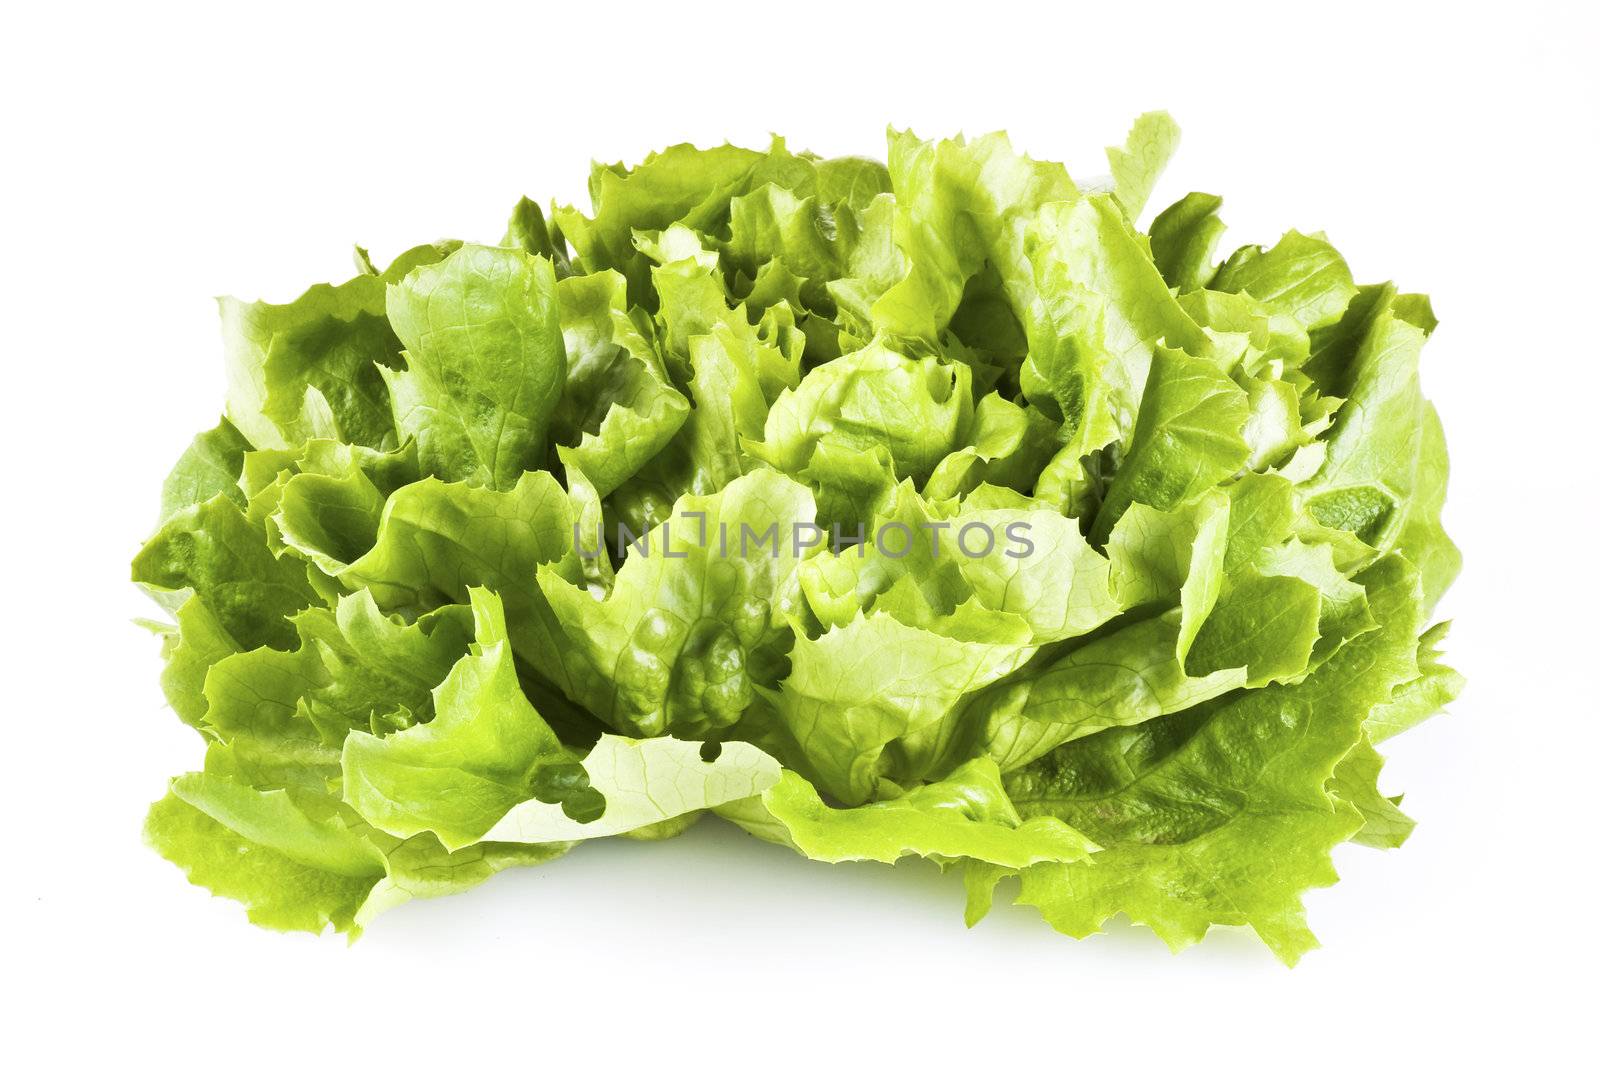 Lettuce by caldix